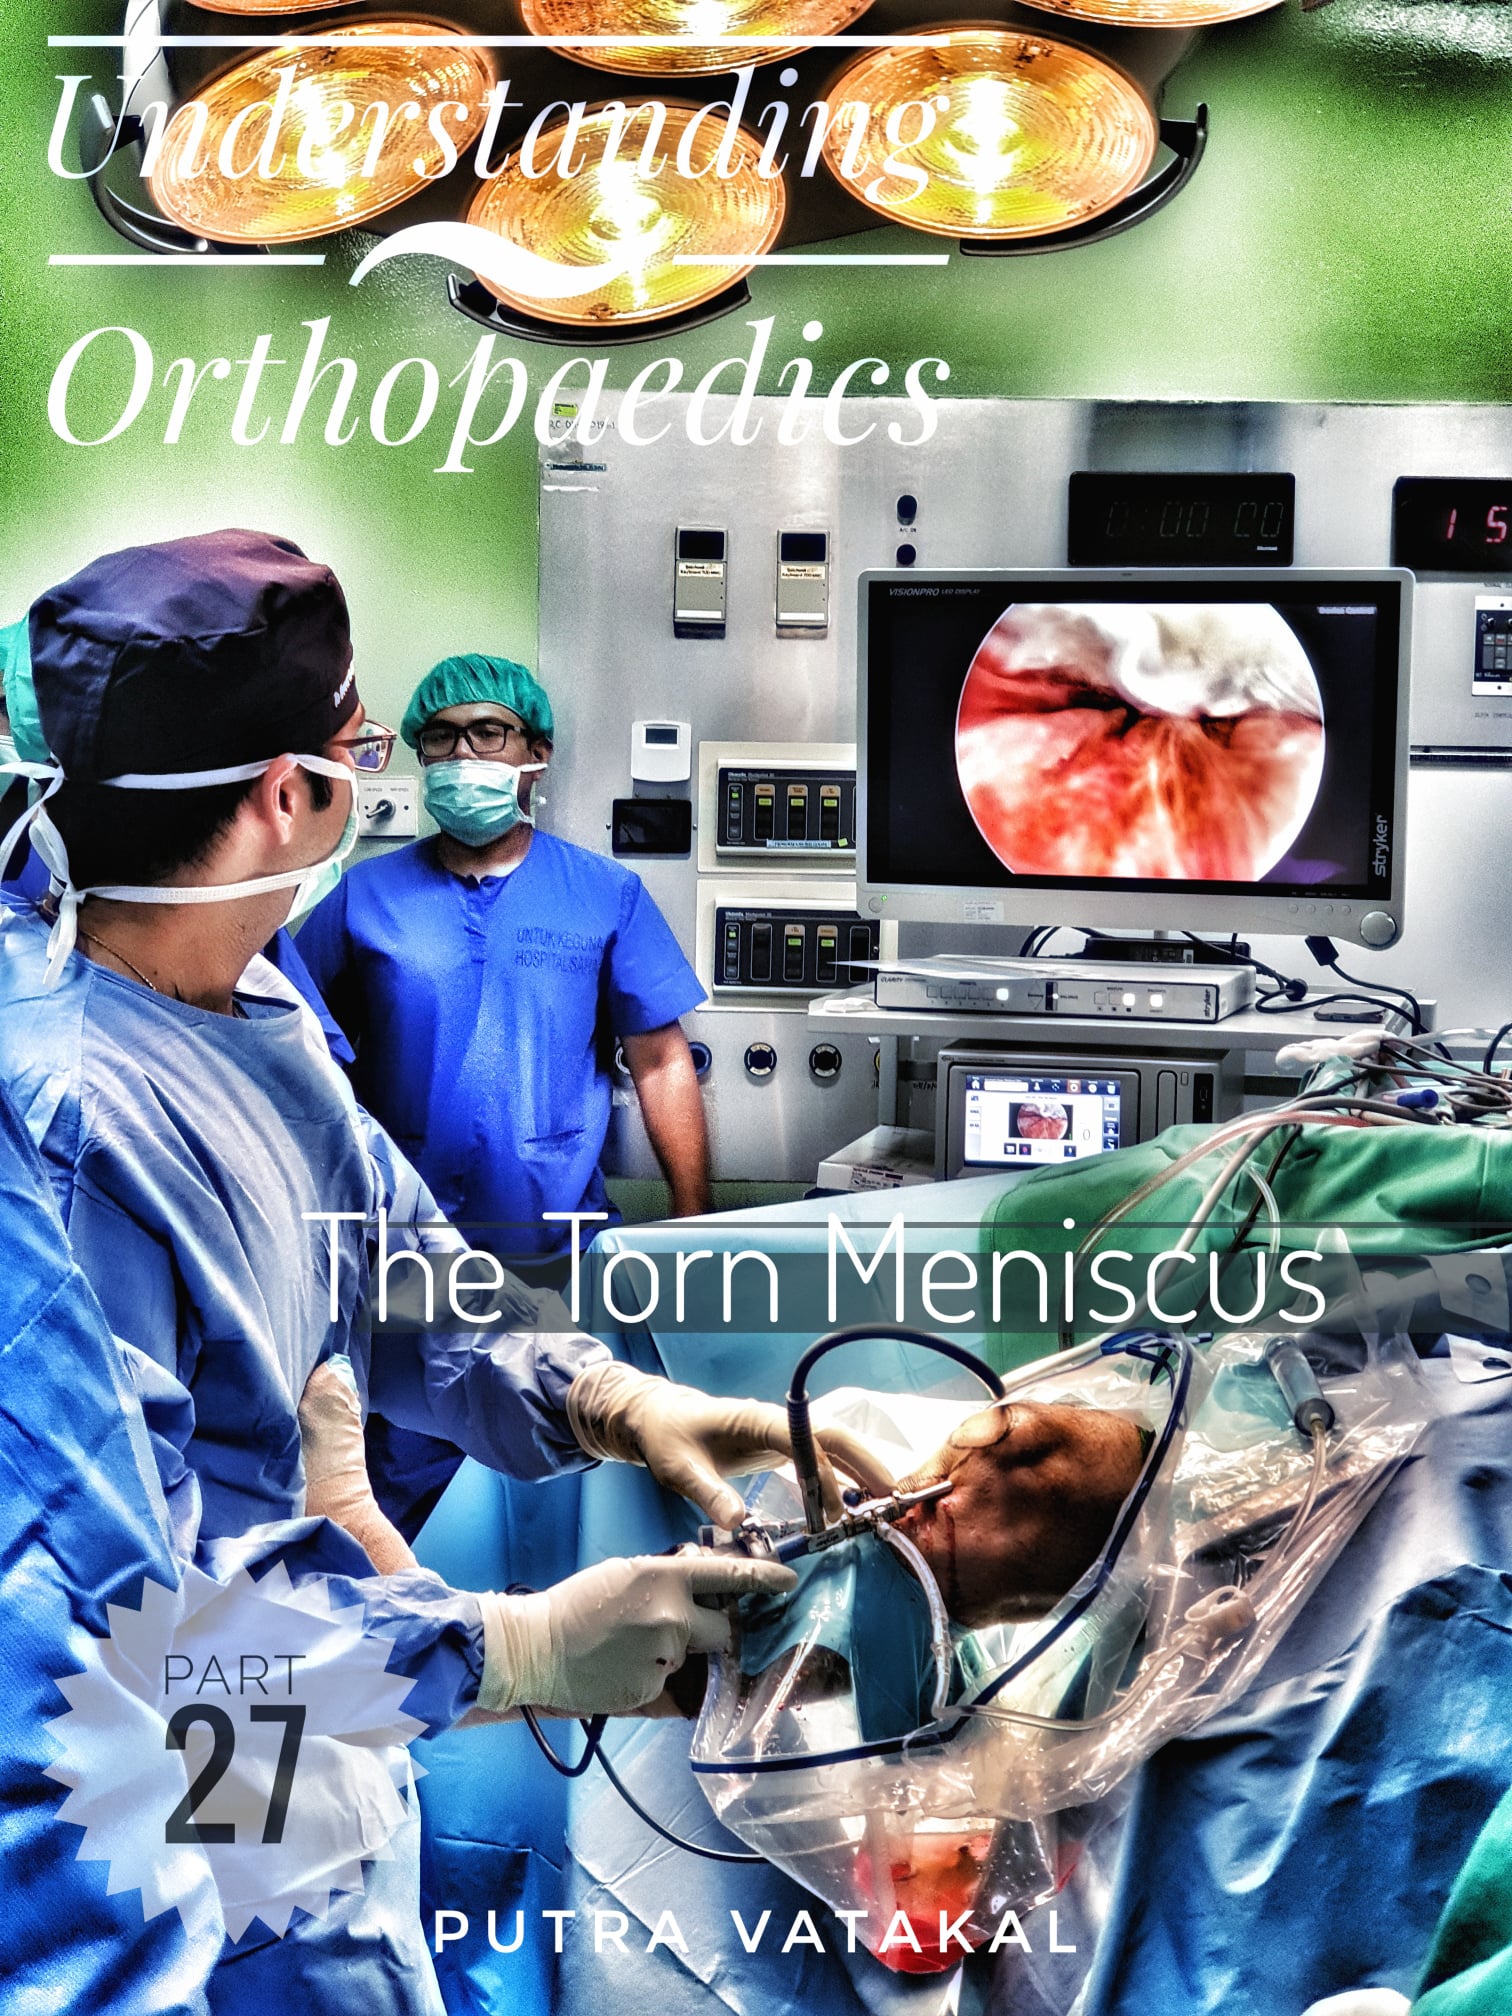 dr putra vatakal, orthopaedic surgeon